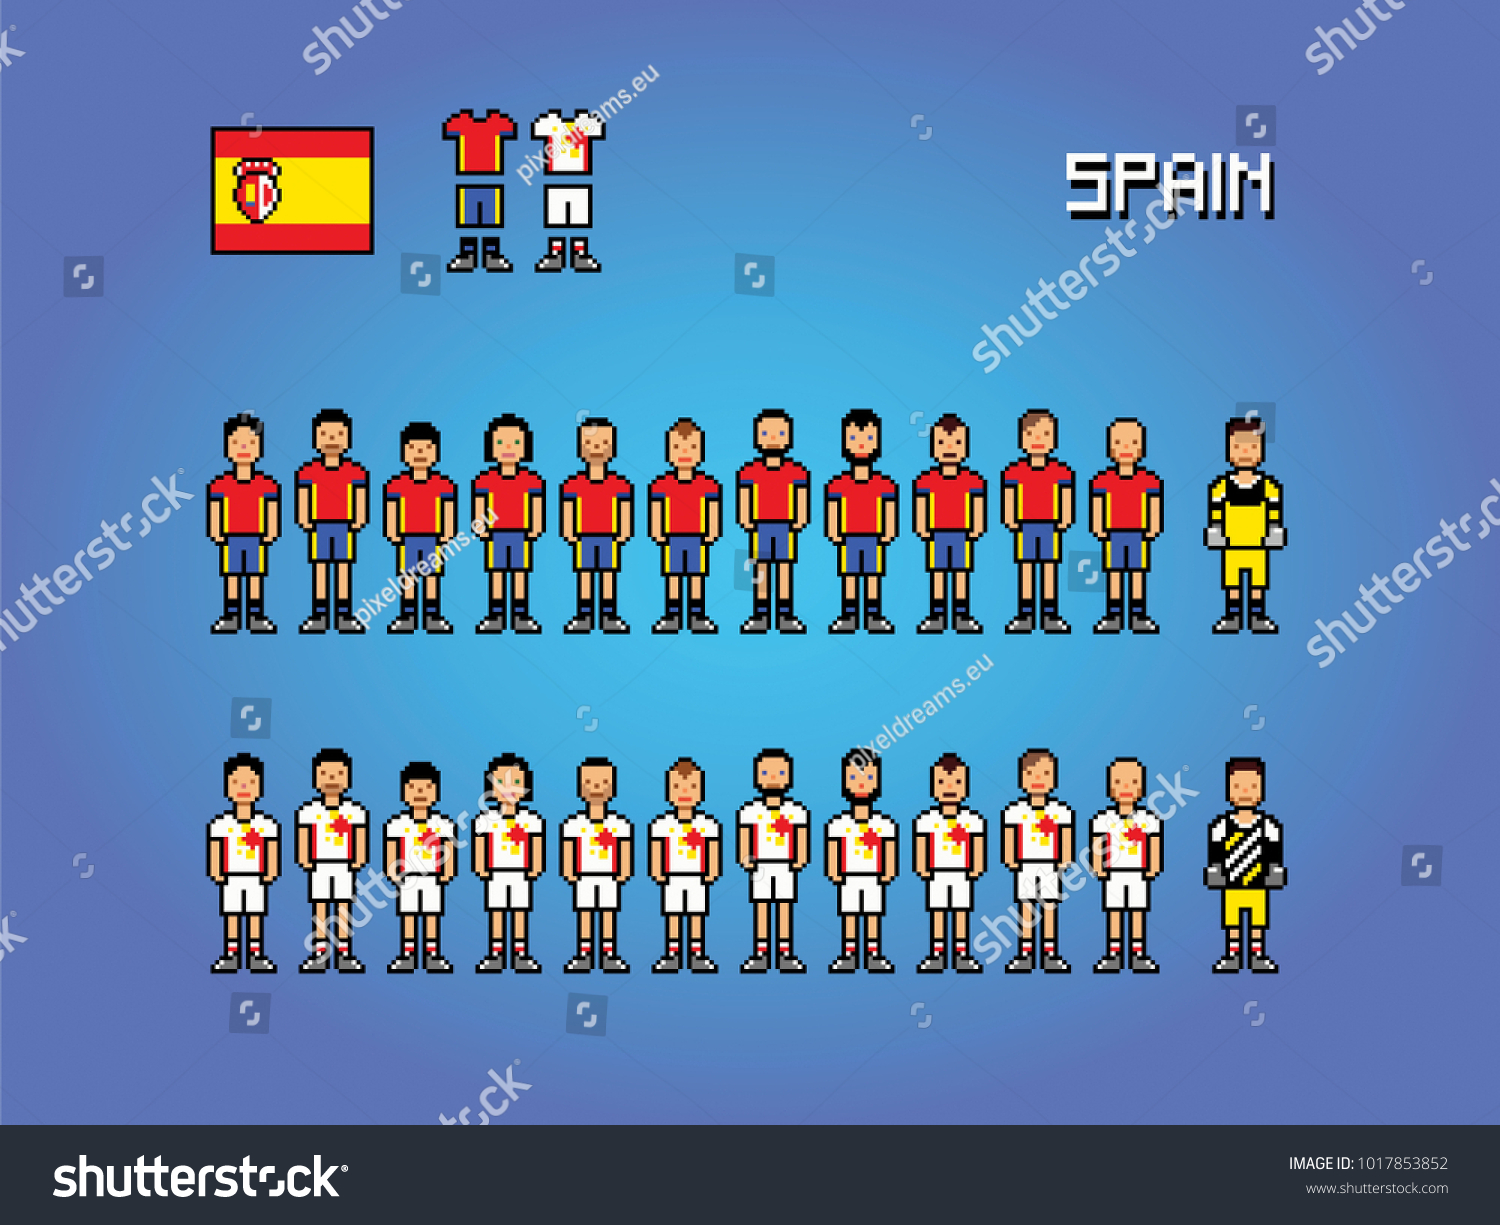 Spain Football Team Uniforms Pixel Art Stock Vector Royalty